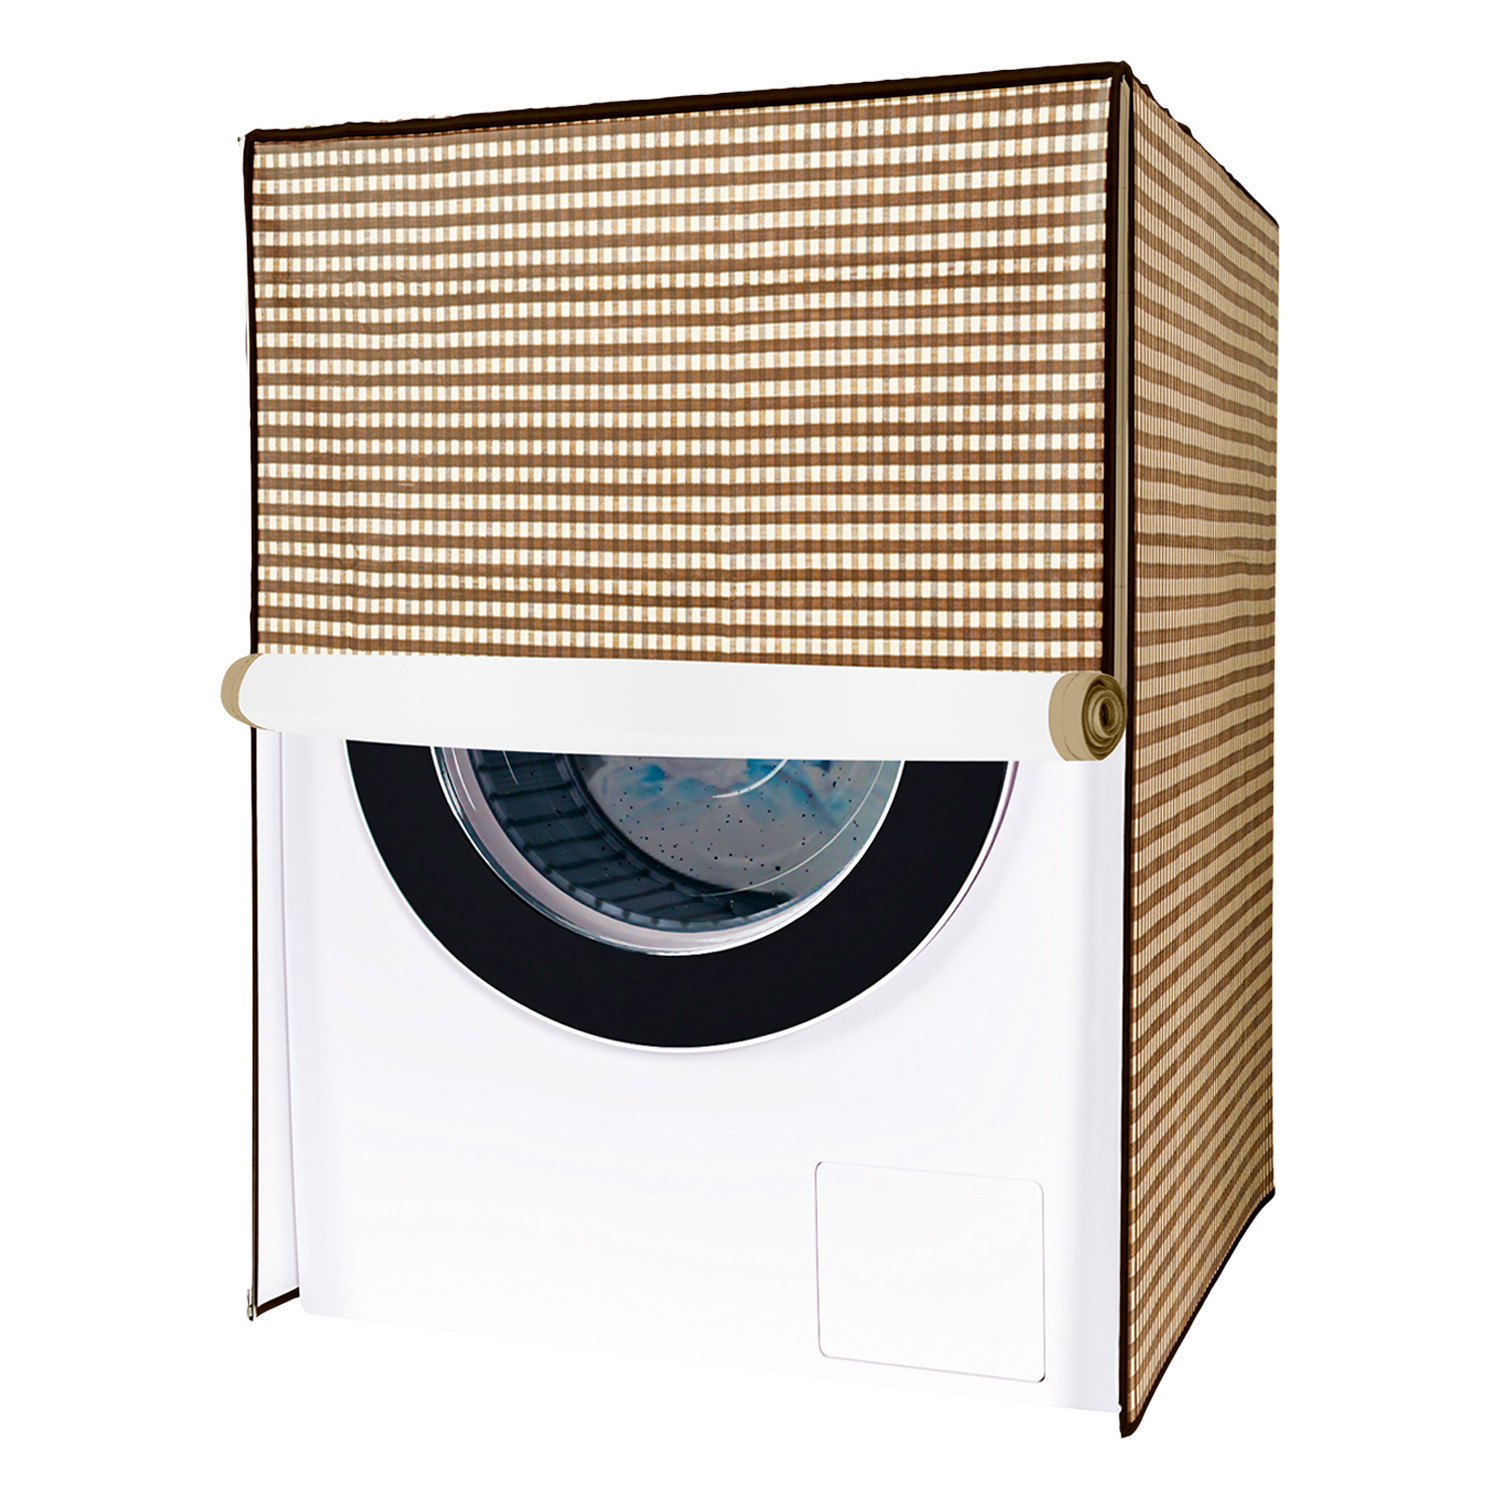 Kuber Industries Washing Machine Cover | Mini Check Print Washing Machine Cover | Soft PVC | Front Load Washing Machine Cover | Brown